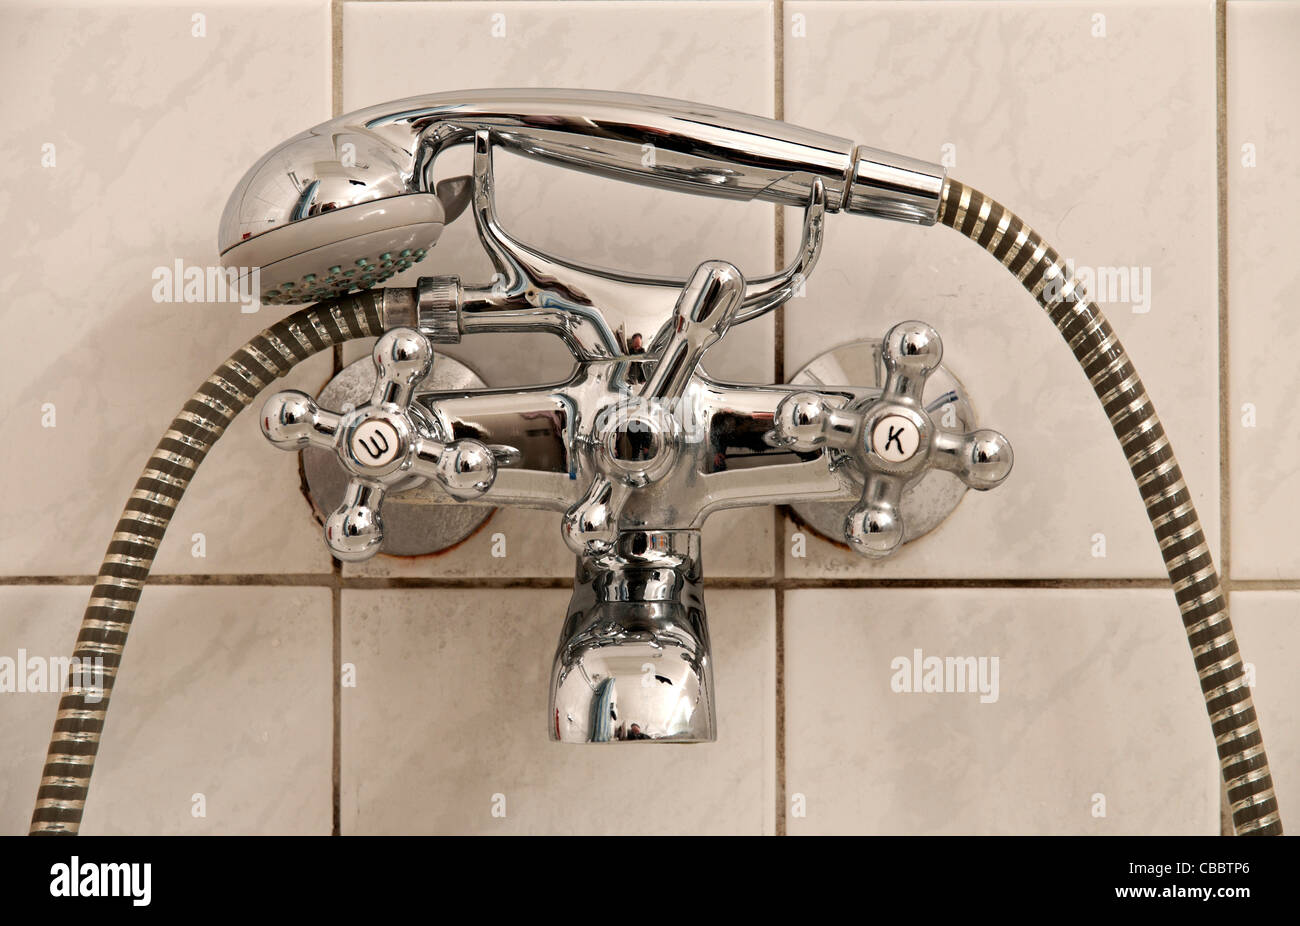 Bathroom mixer tap warm & kalt, with shower head, Germany. Stock Photo